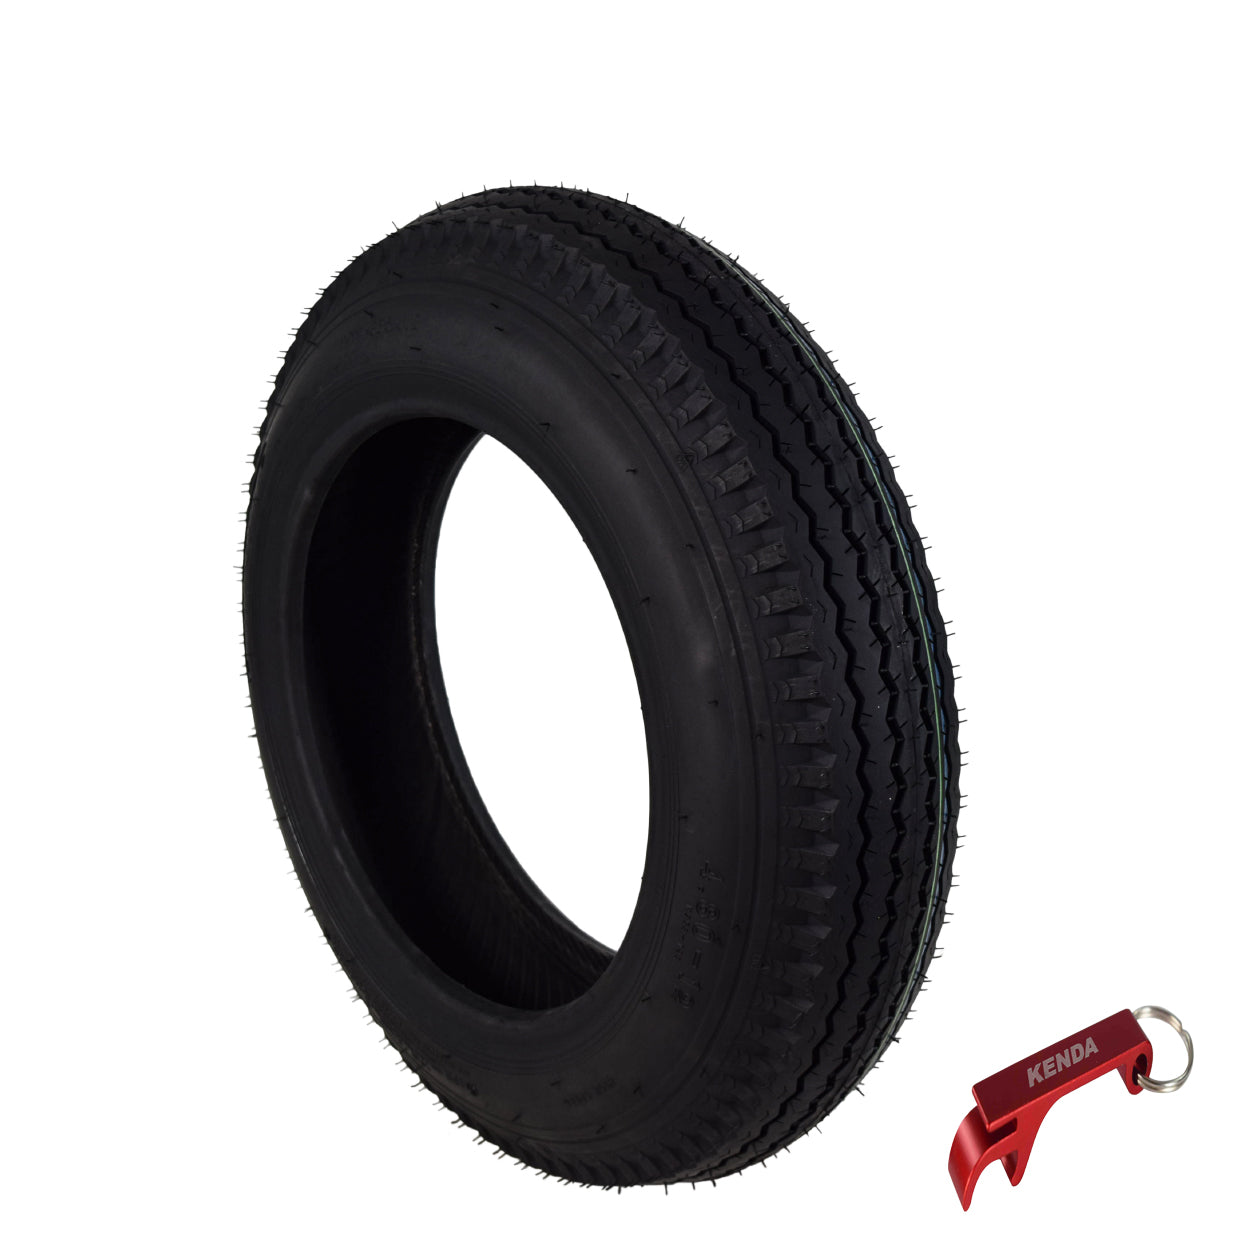 Kenda 279B1089 4.80-12 Load Star 4 Ply Tubeless Trailer Tire